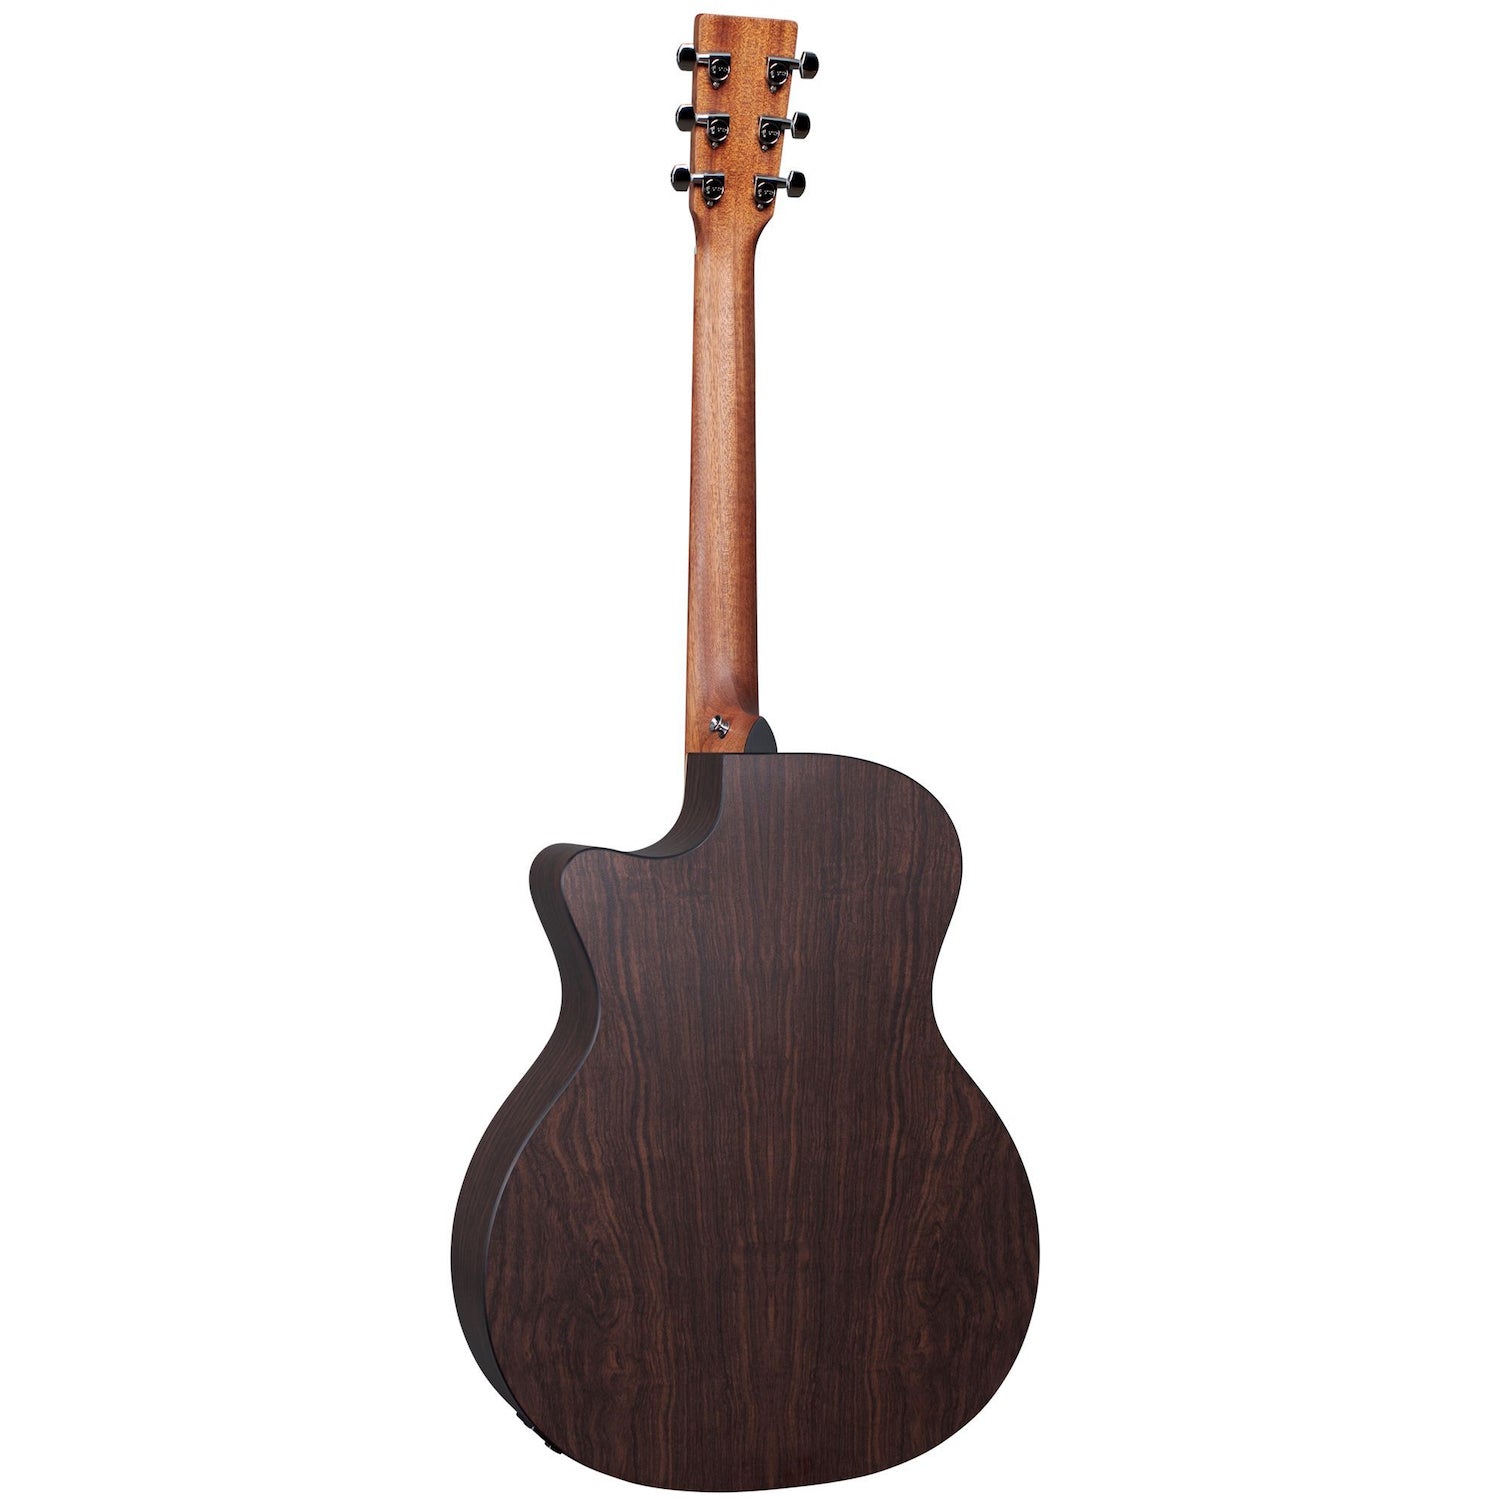 Martin GPCX2E Rosewood Acoustic Guitar w/Bag